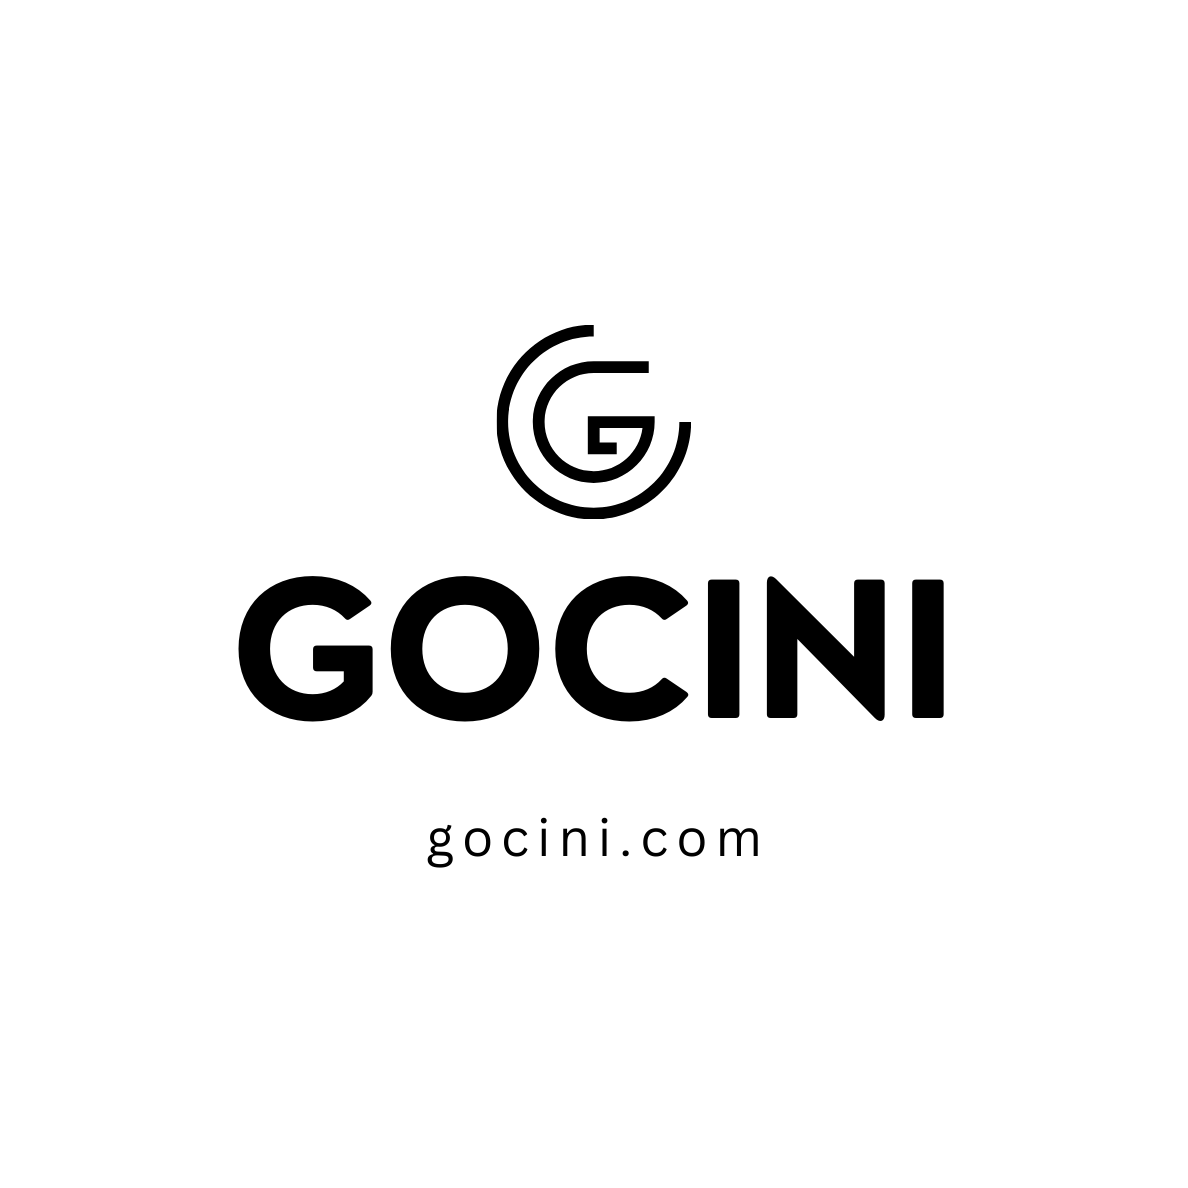 gocini.com - domain for sale